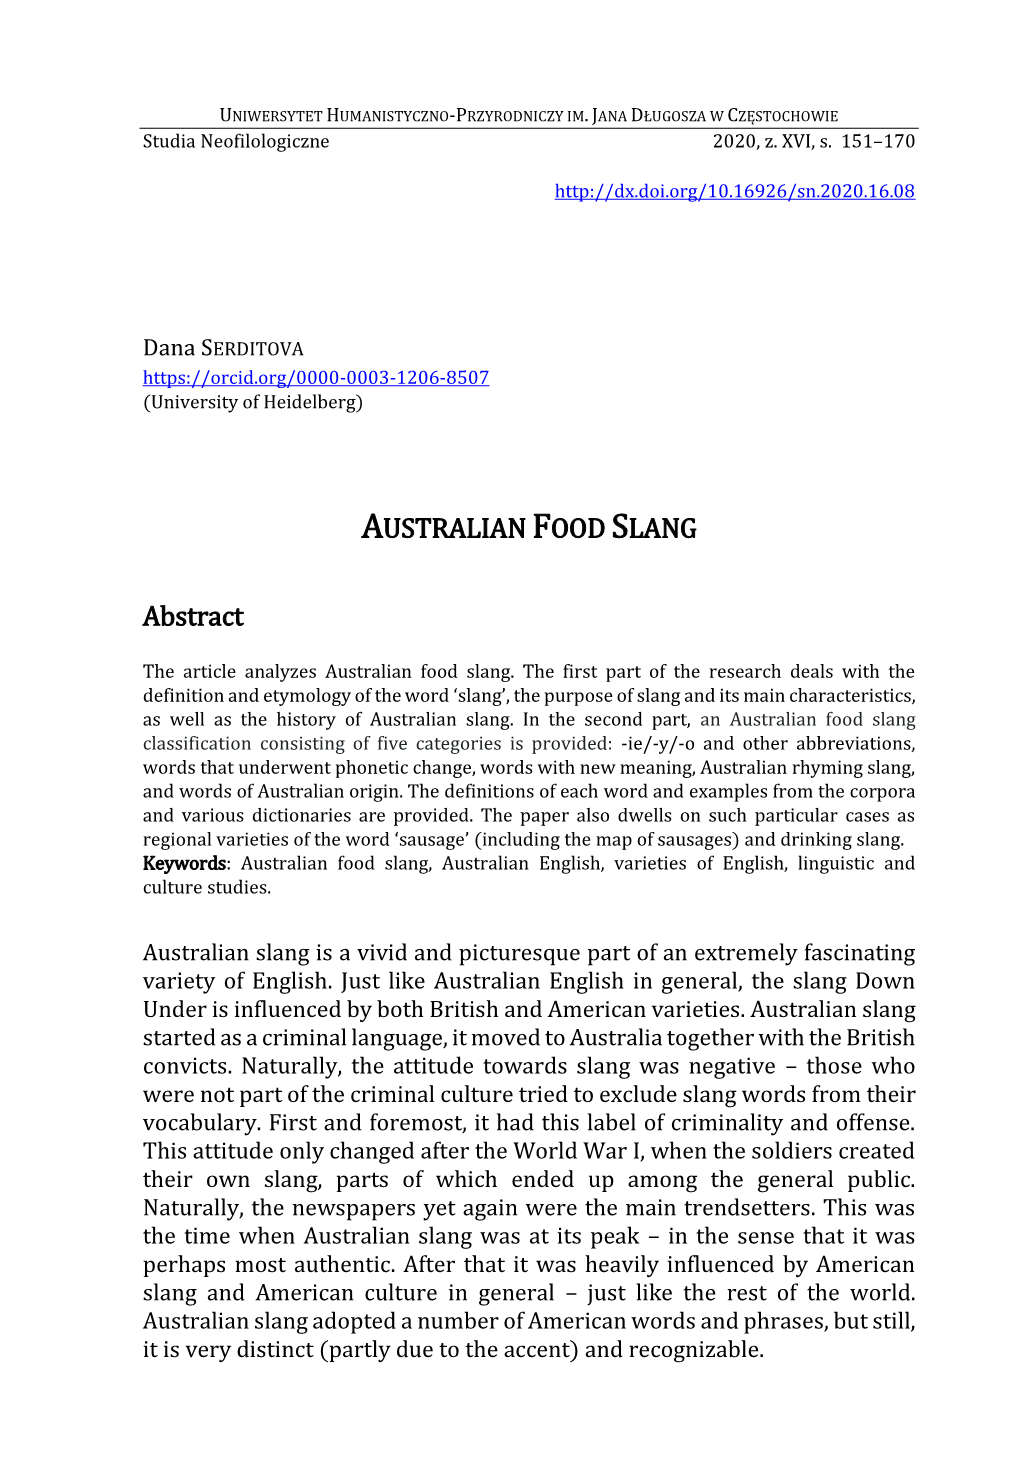 AUSTRALIAN FOOD SLANG Abstract